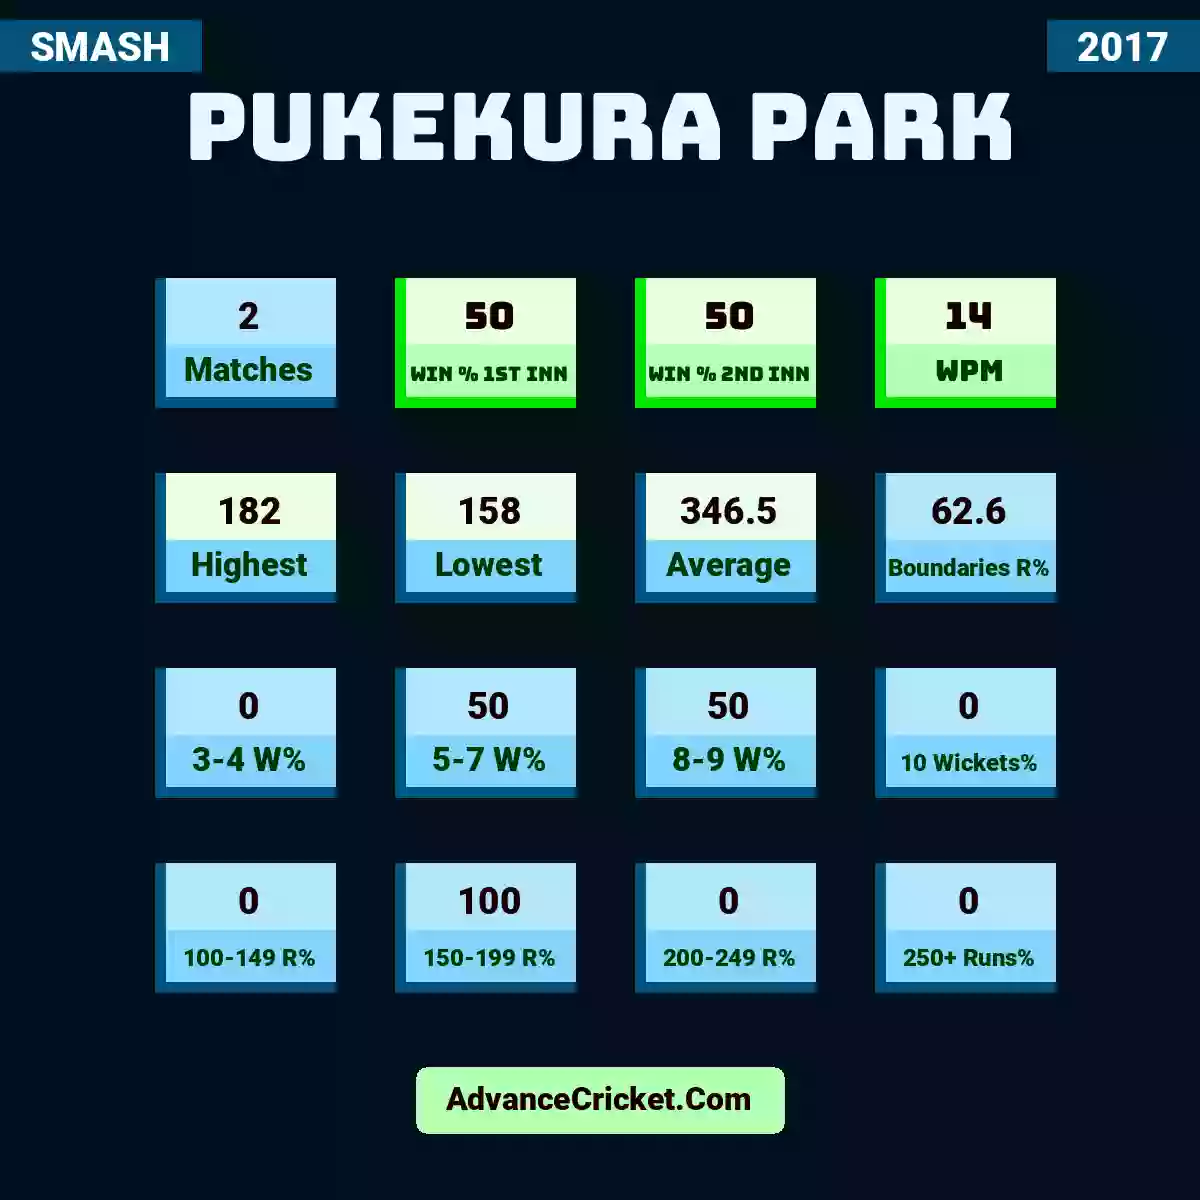 Image showing Pukekura Park with Matches: 2, Win % 1st Inn: 50, Win % 2nd Inn: 50, WPM: 14, Highest: 182, Lowest: 158, Average: 346.5, Boundaries R%: 62.6, 3-4 W%: 0, 5-7 W%: 50, 8-9 W%: 50, 10 Wickets%: 0, 100-149 R%: 0, 150-199 R%: 100, 200-249 R%: 0, 250+ Runs%: 0.